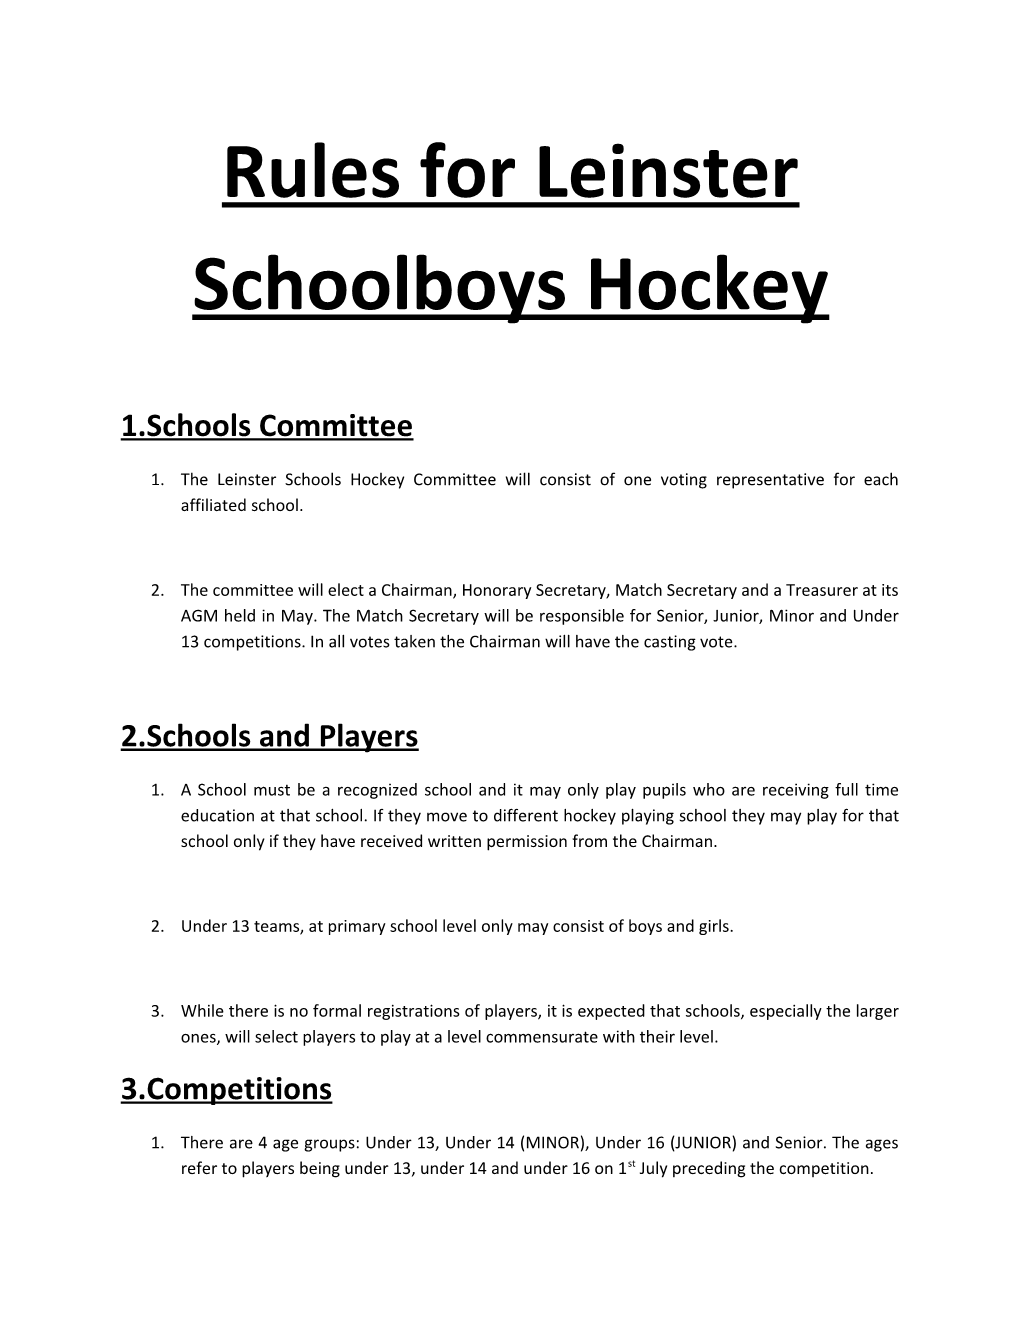 Rules for Leinster Schoolboys Hockey